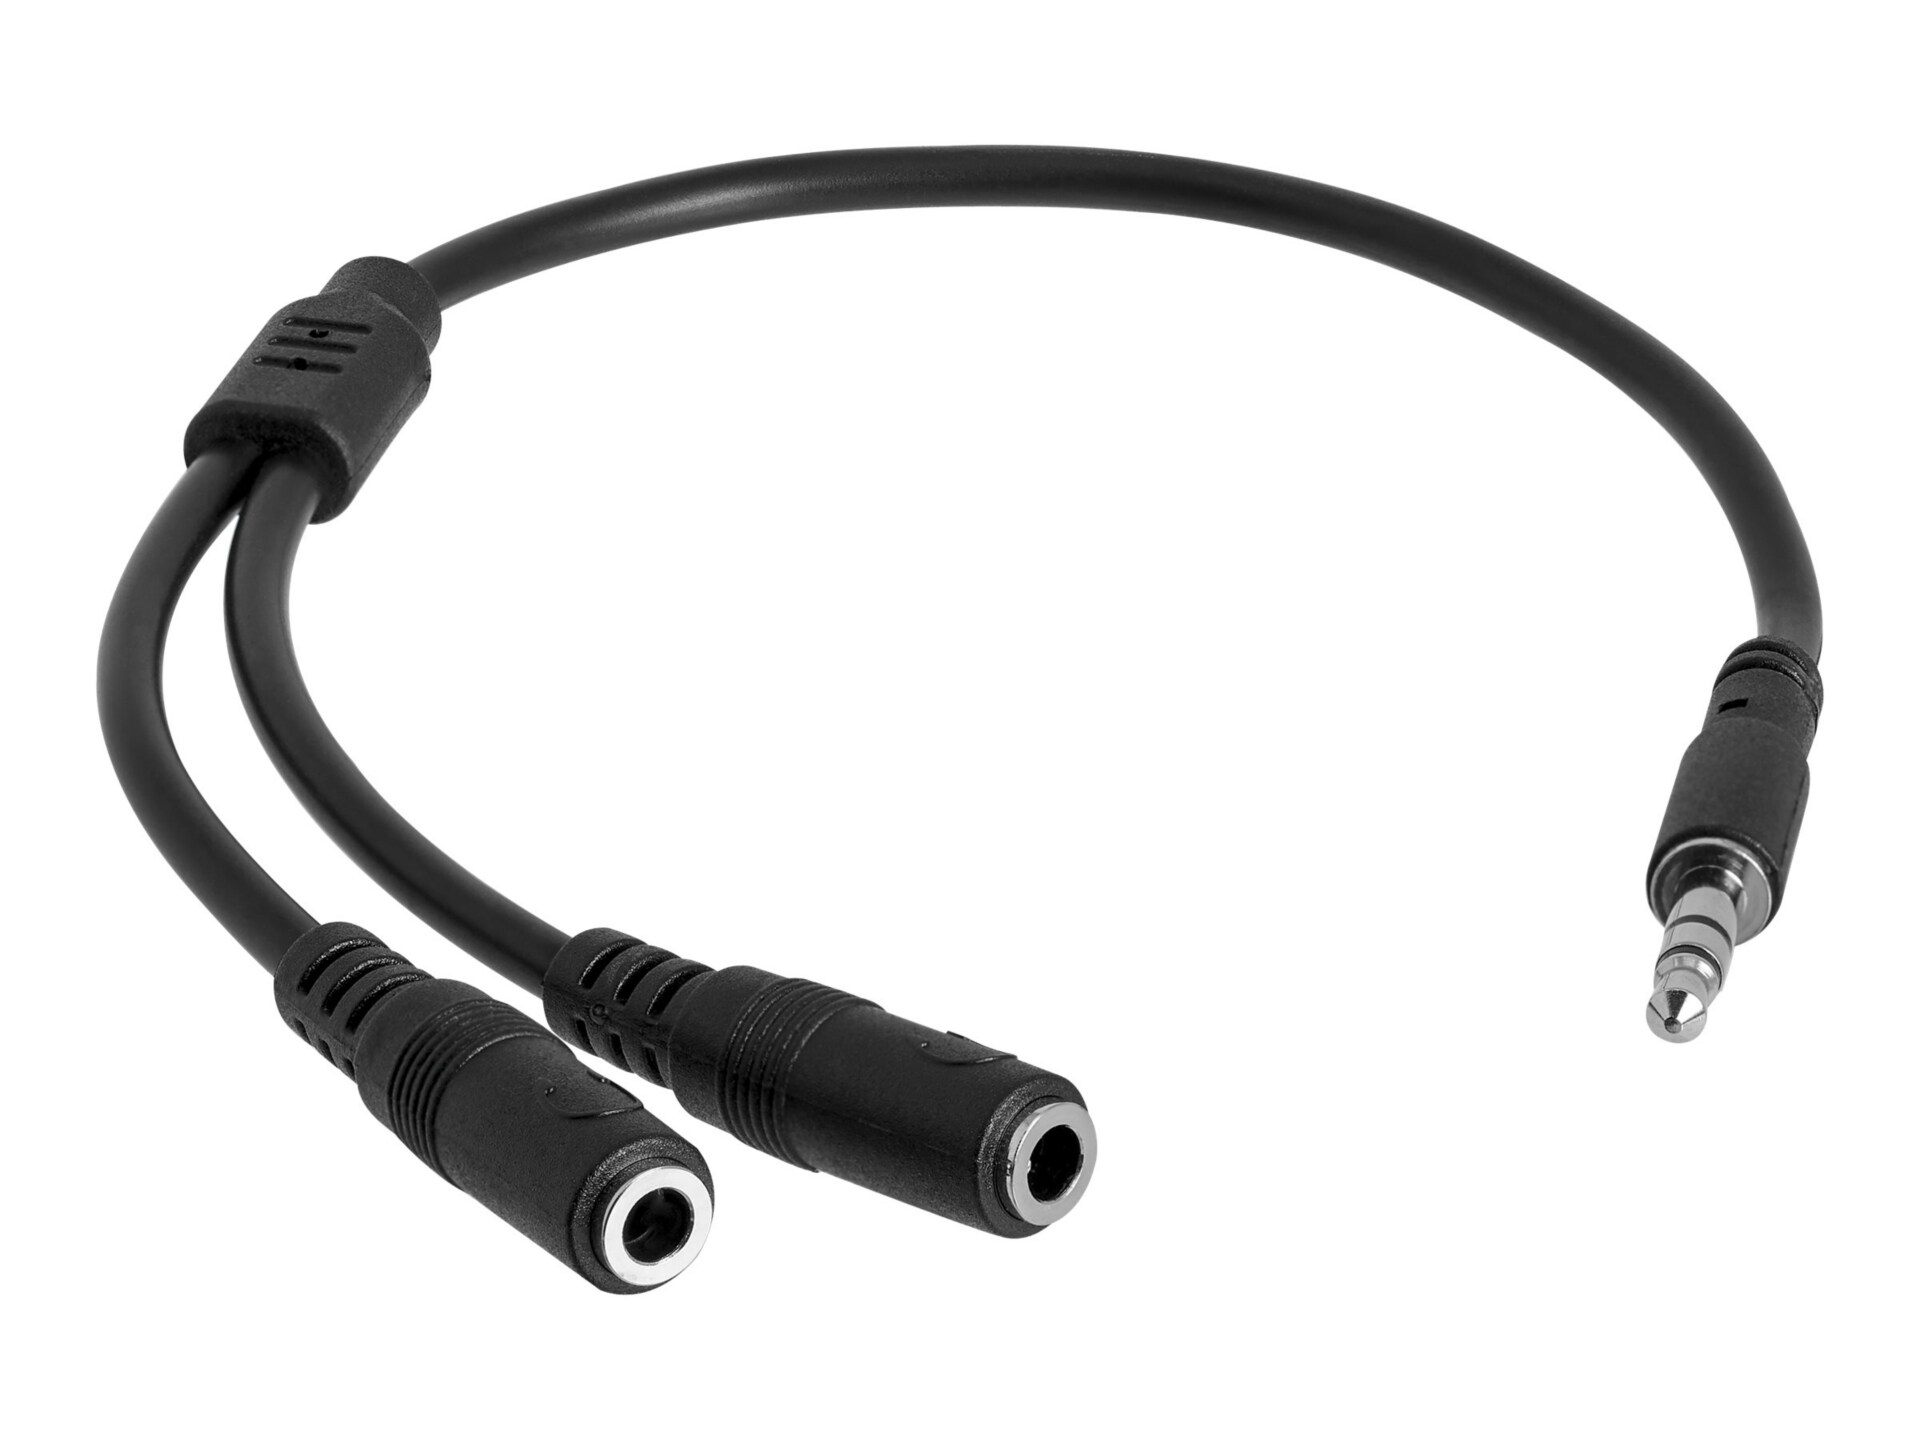 StarTech.com Slim Stereo Splitter Cable - 3.5mm Male to 2x 3.5mm Female -  Split one headphone jack into two separate jacks - 3.5mm audio splitter 